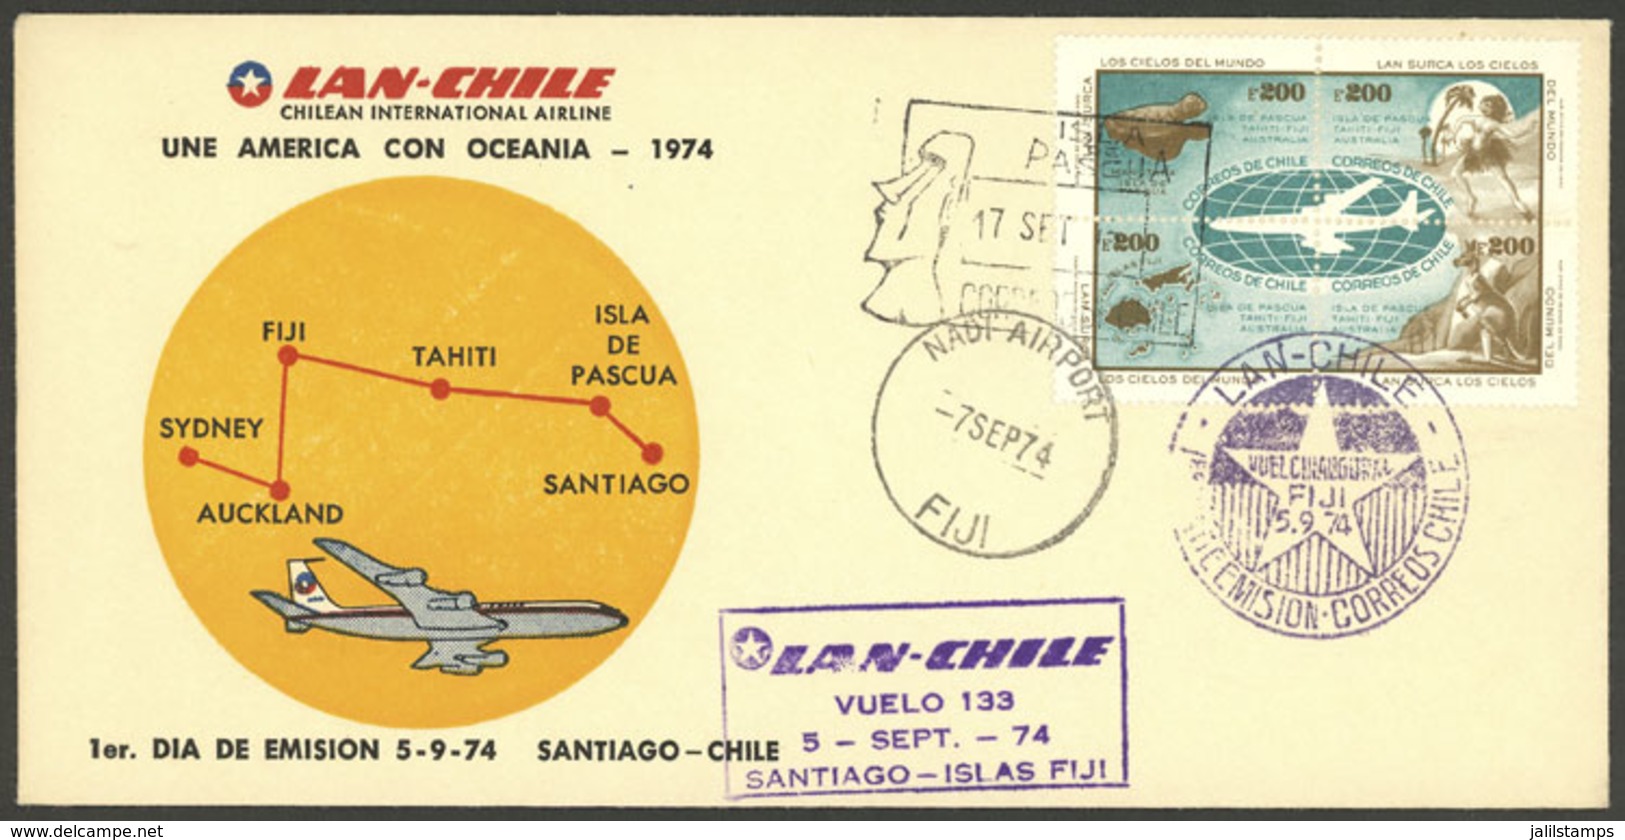 CHILE: 7/SE/1974 FIJI - PASCUA - SANTIAGO, First Flight (return) Of Lan-Chile, VF Quality! - Chili